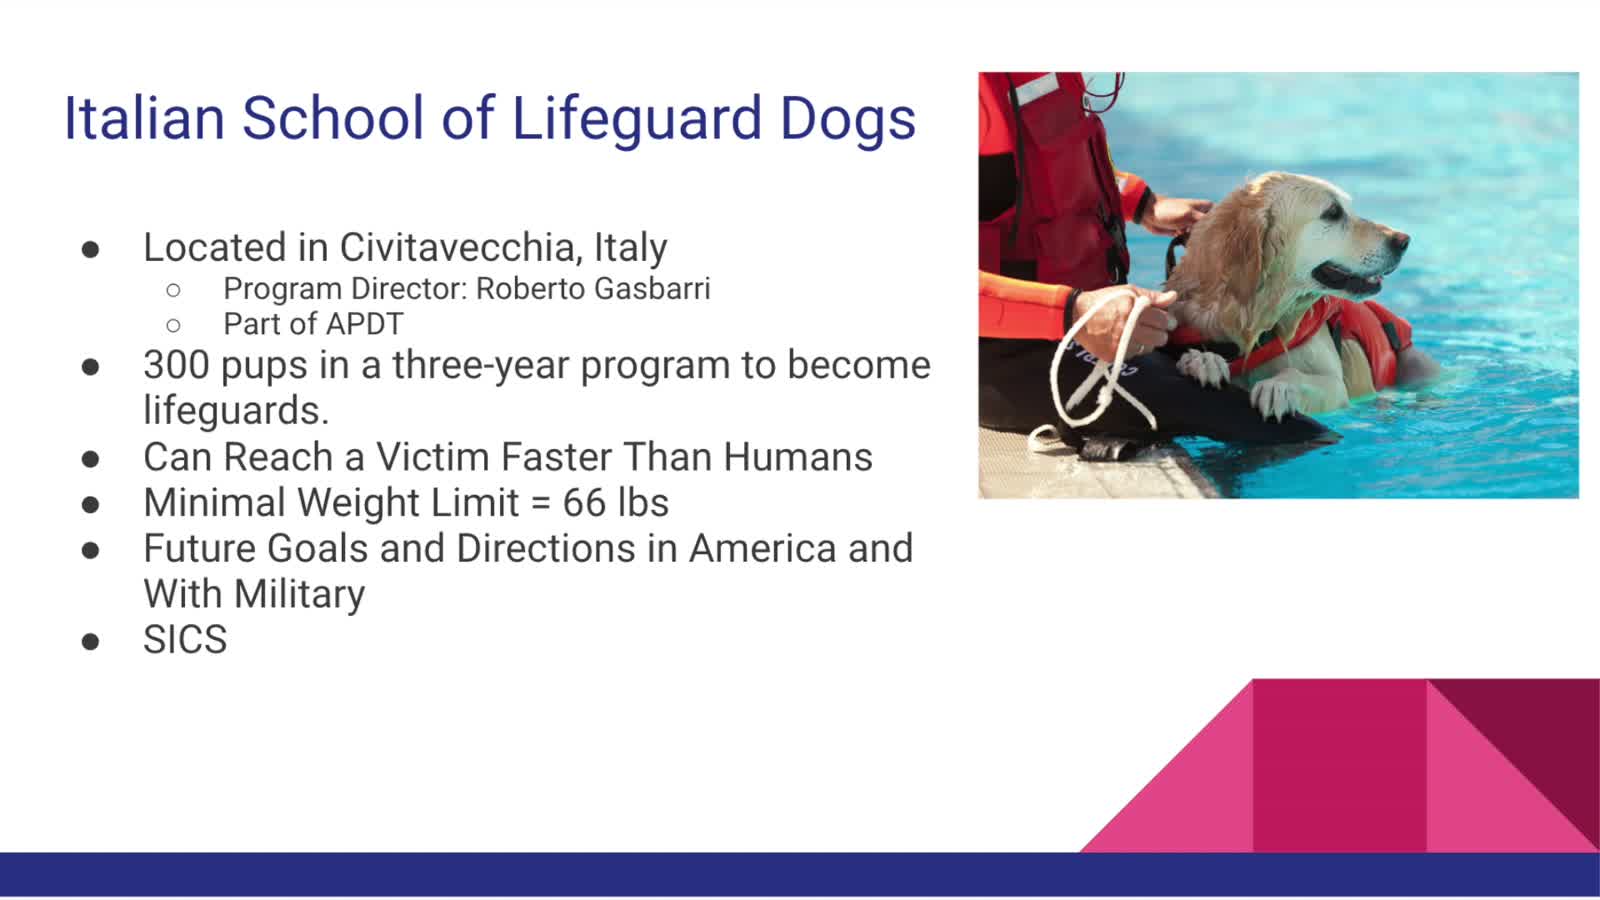 Lifeguard Dogs in Croatia and Italy